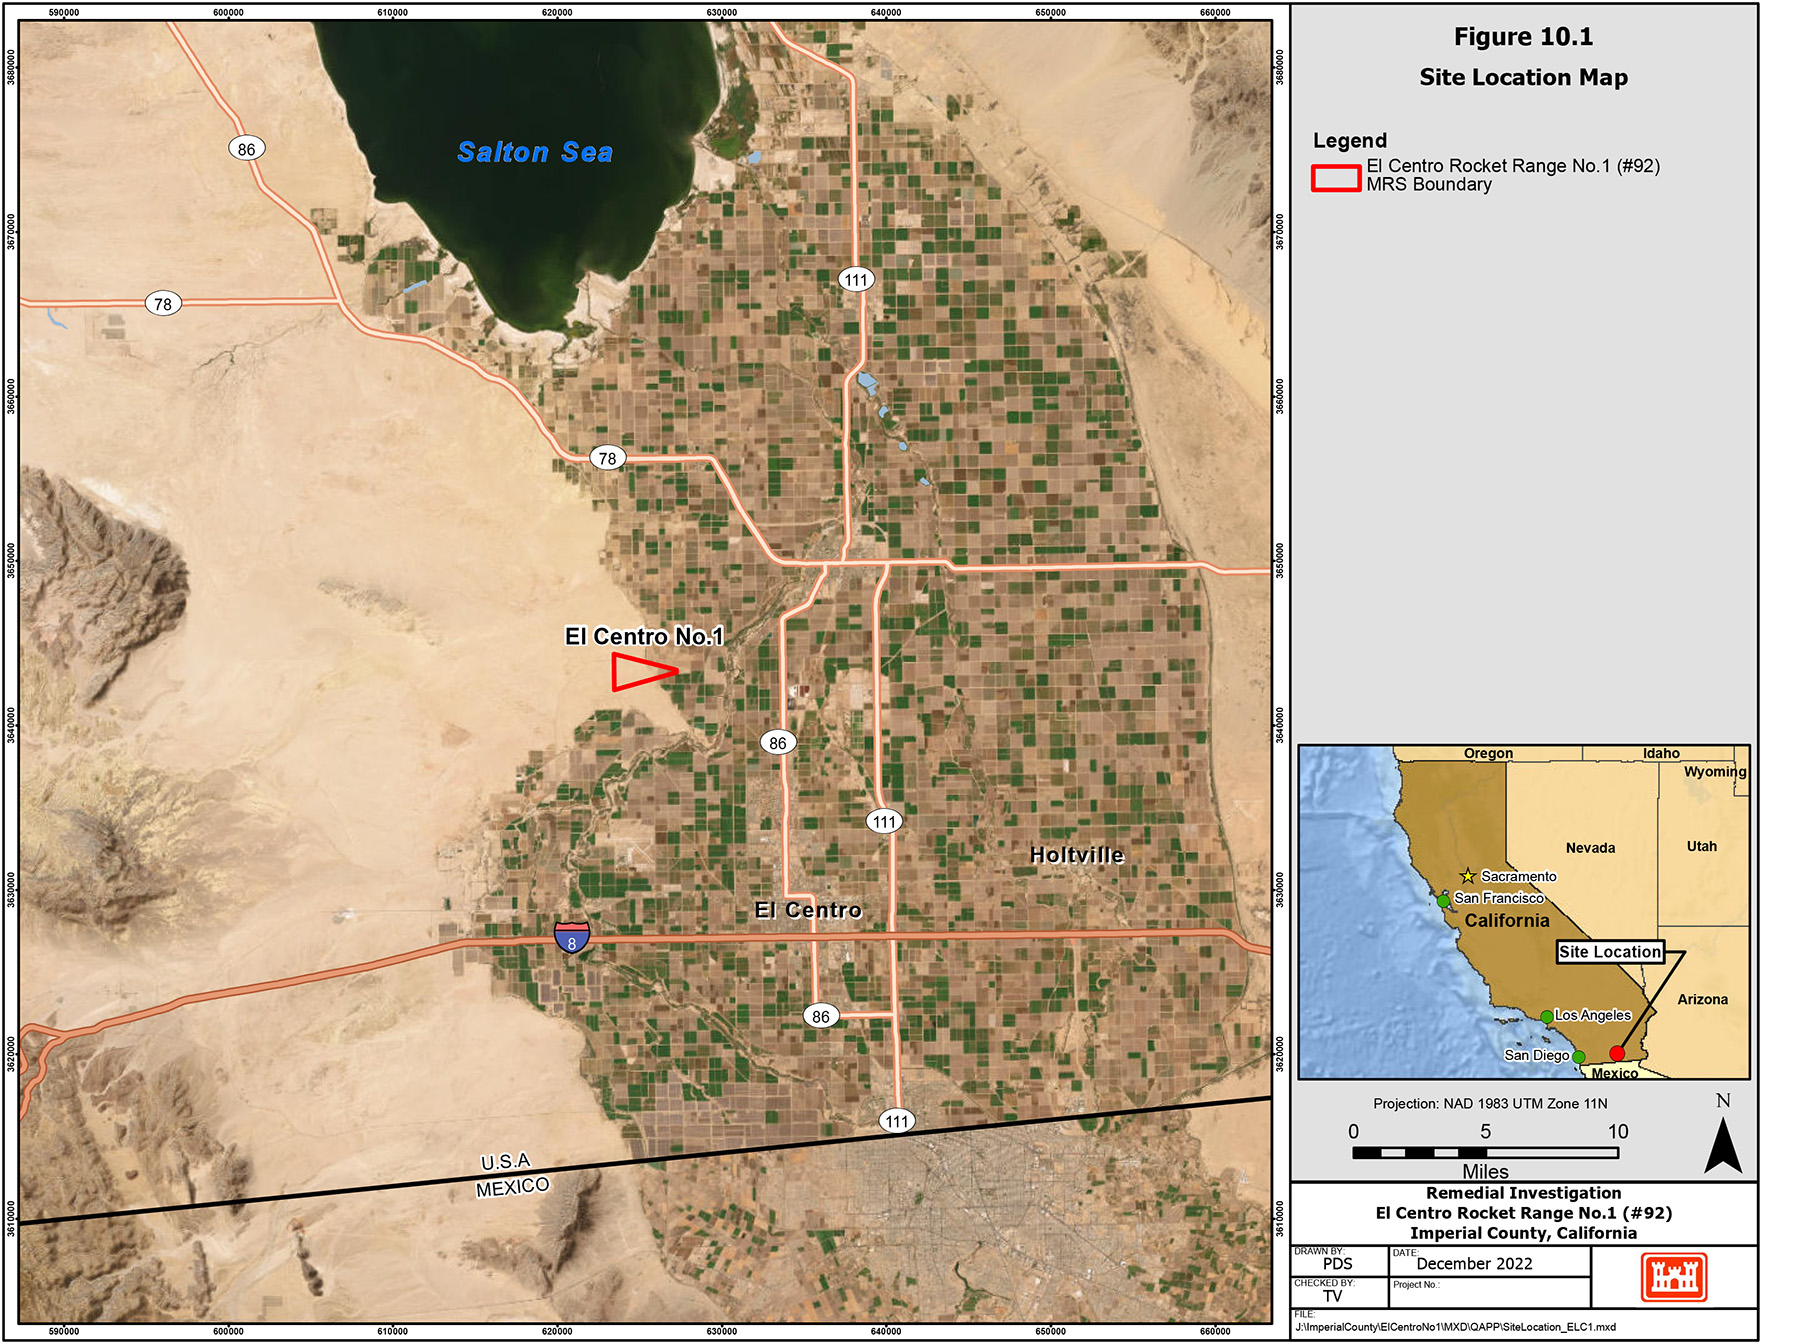 Site Location Map for El Centro Rocket Target Range #1